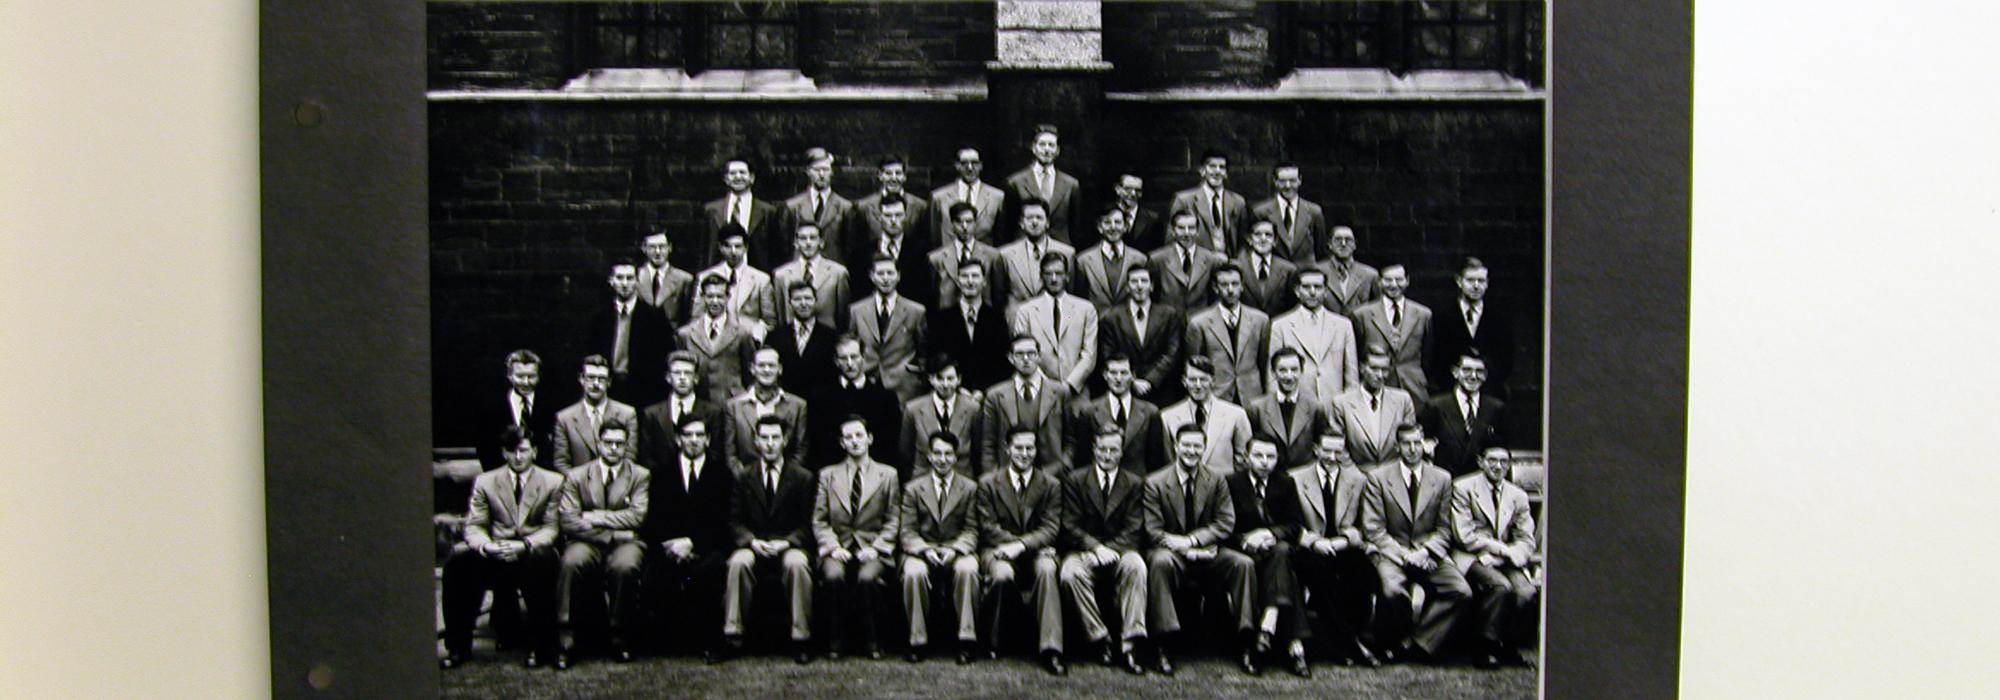 1954 Matriculation photograph